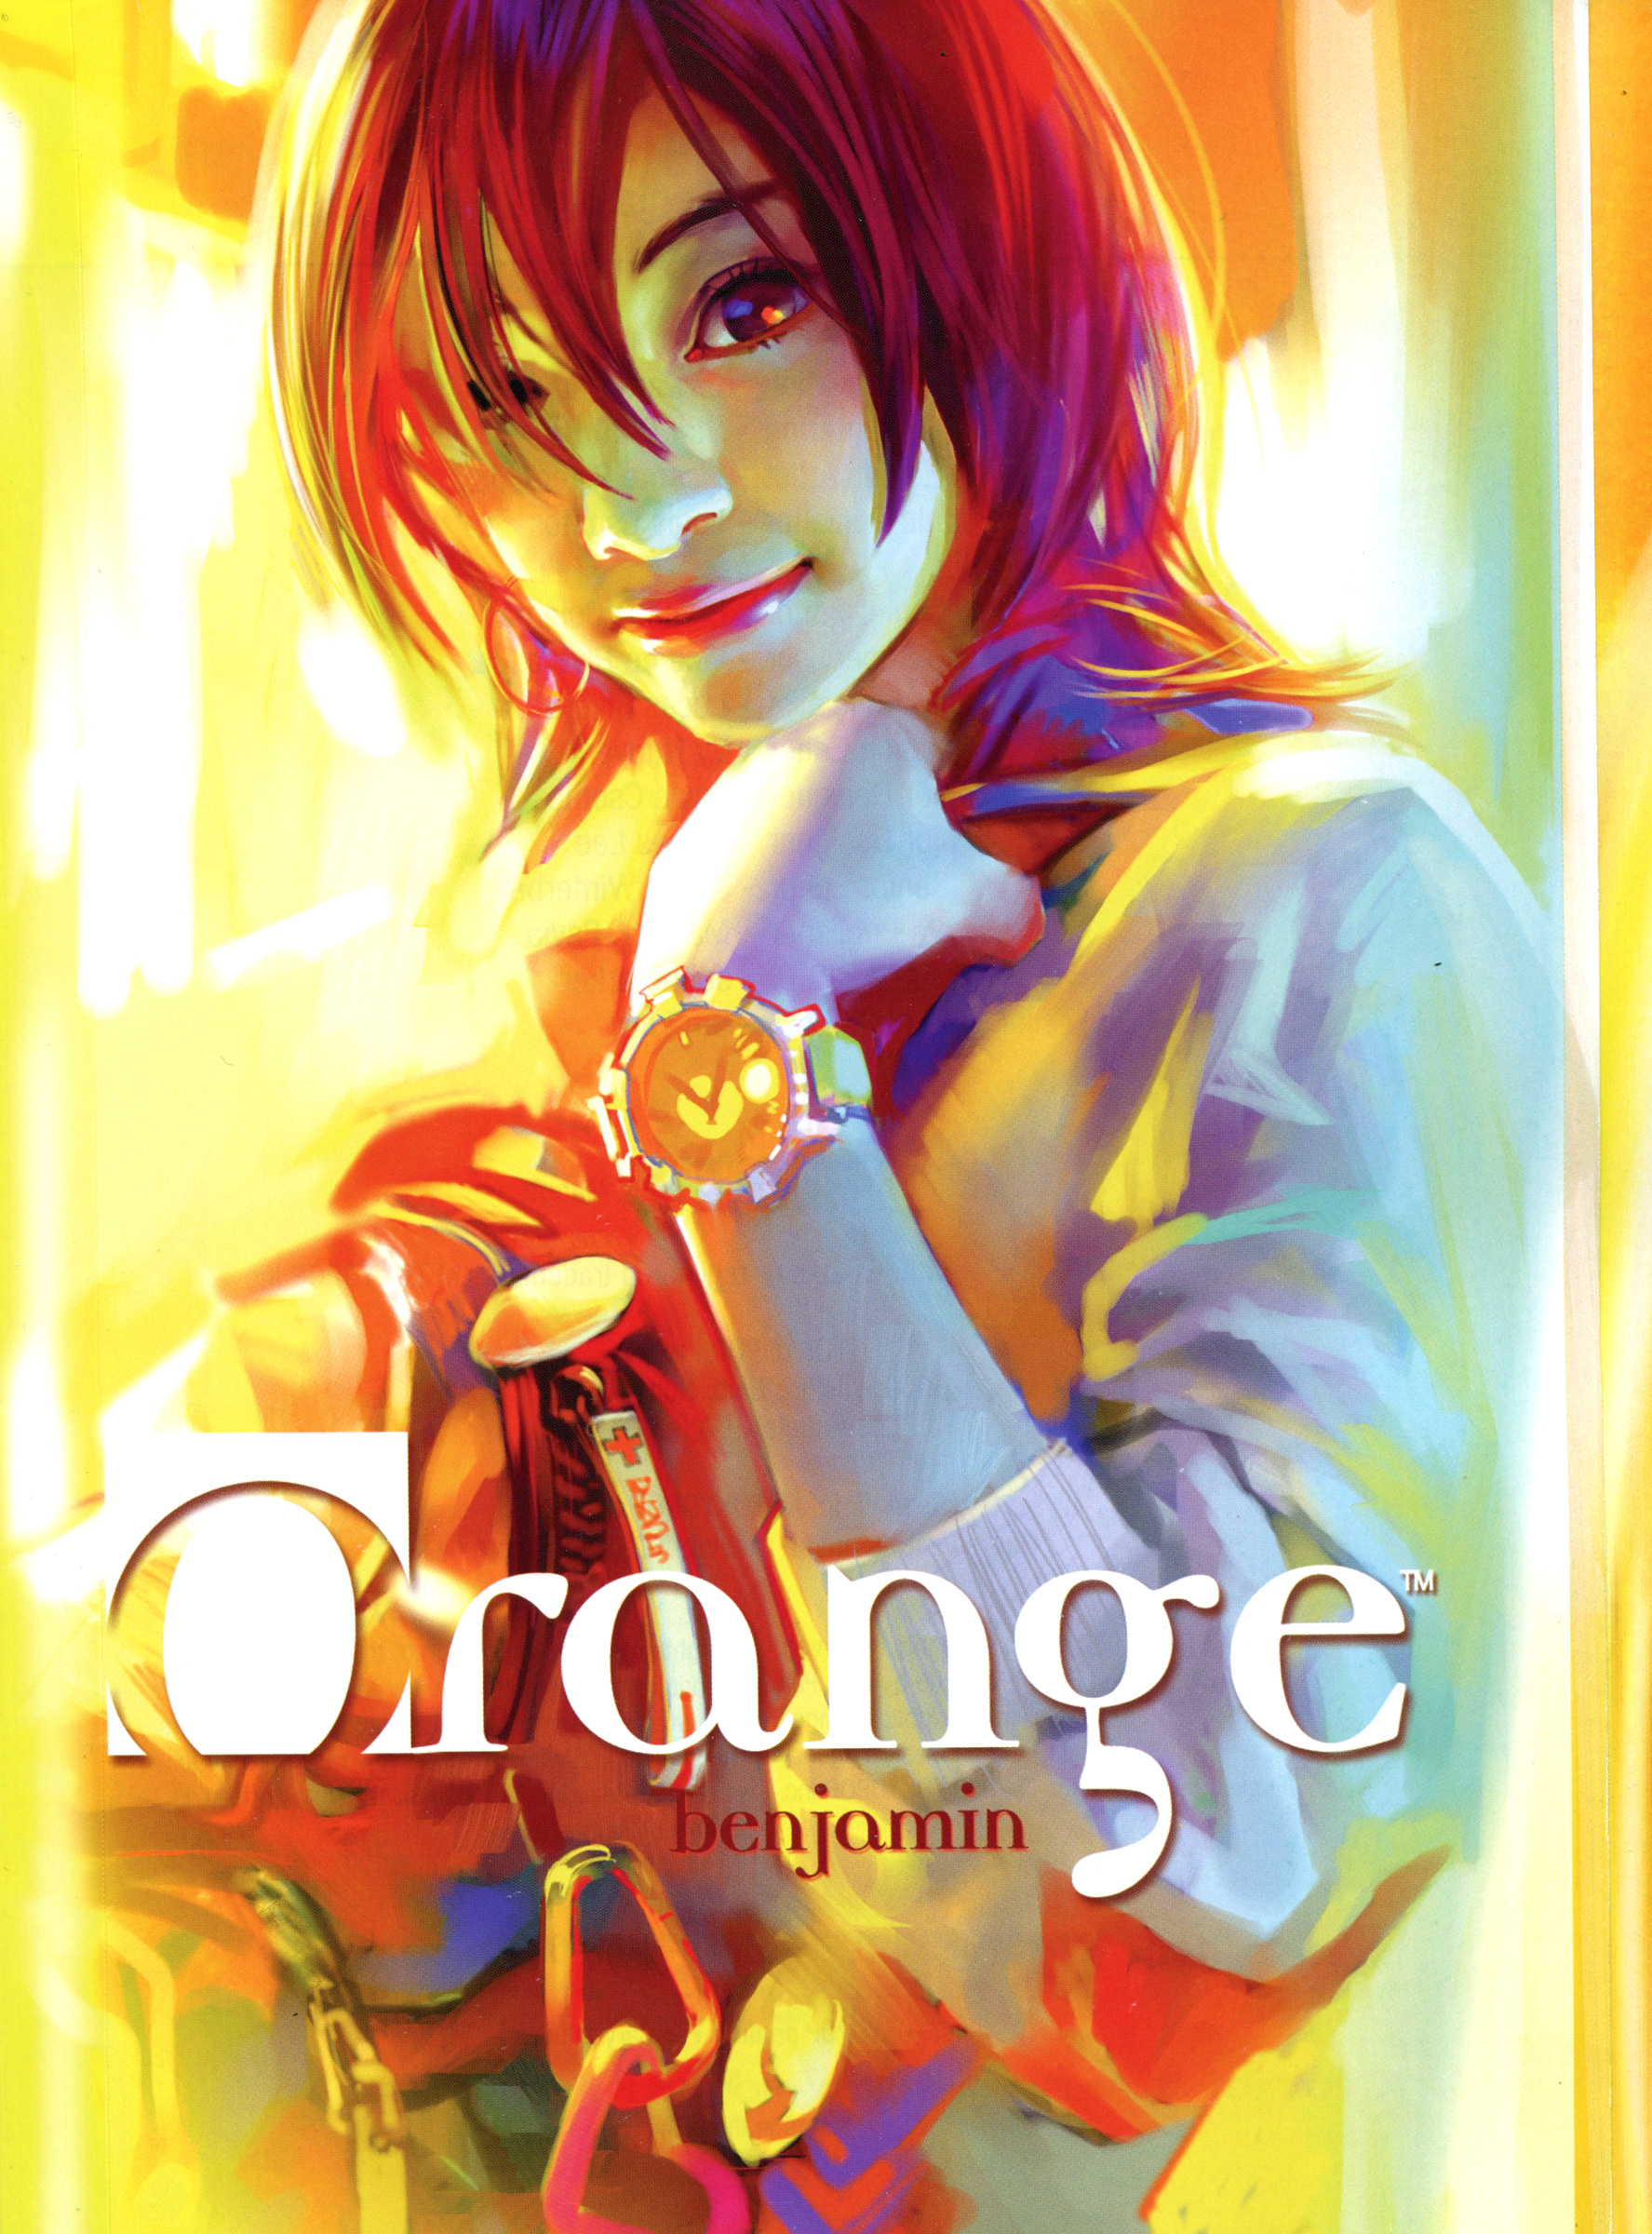 Orange by Benjamin manhua review